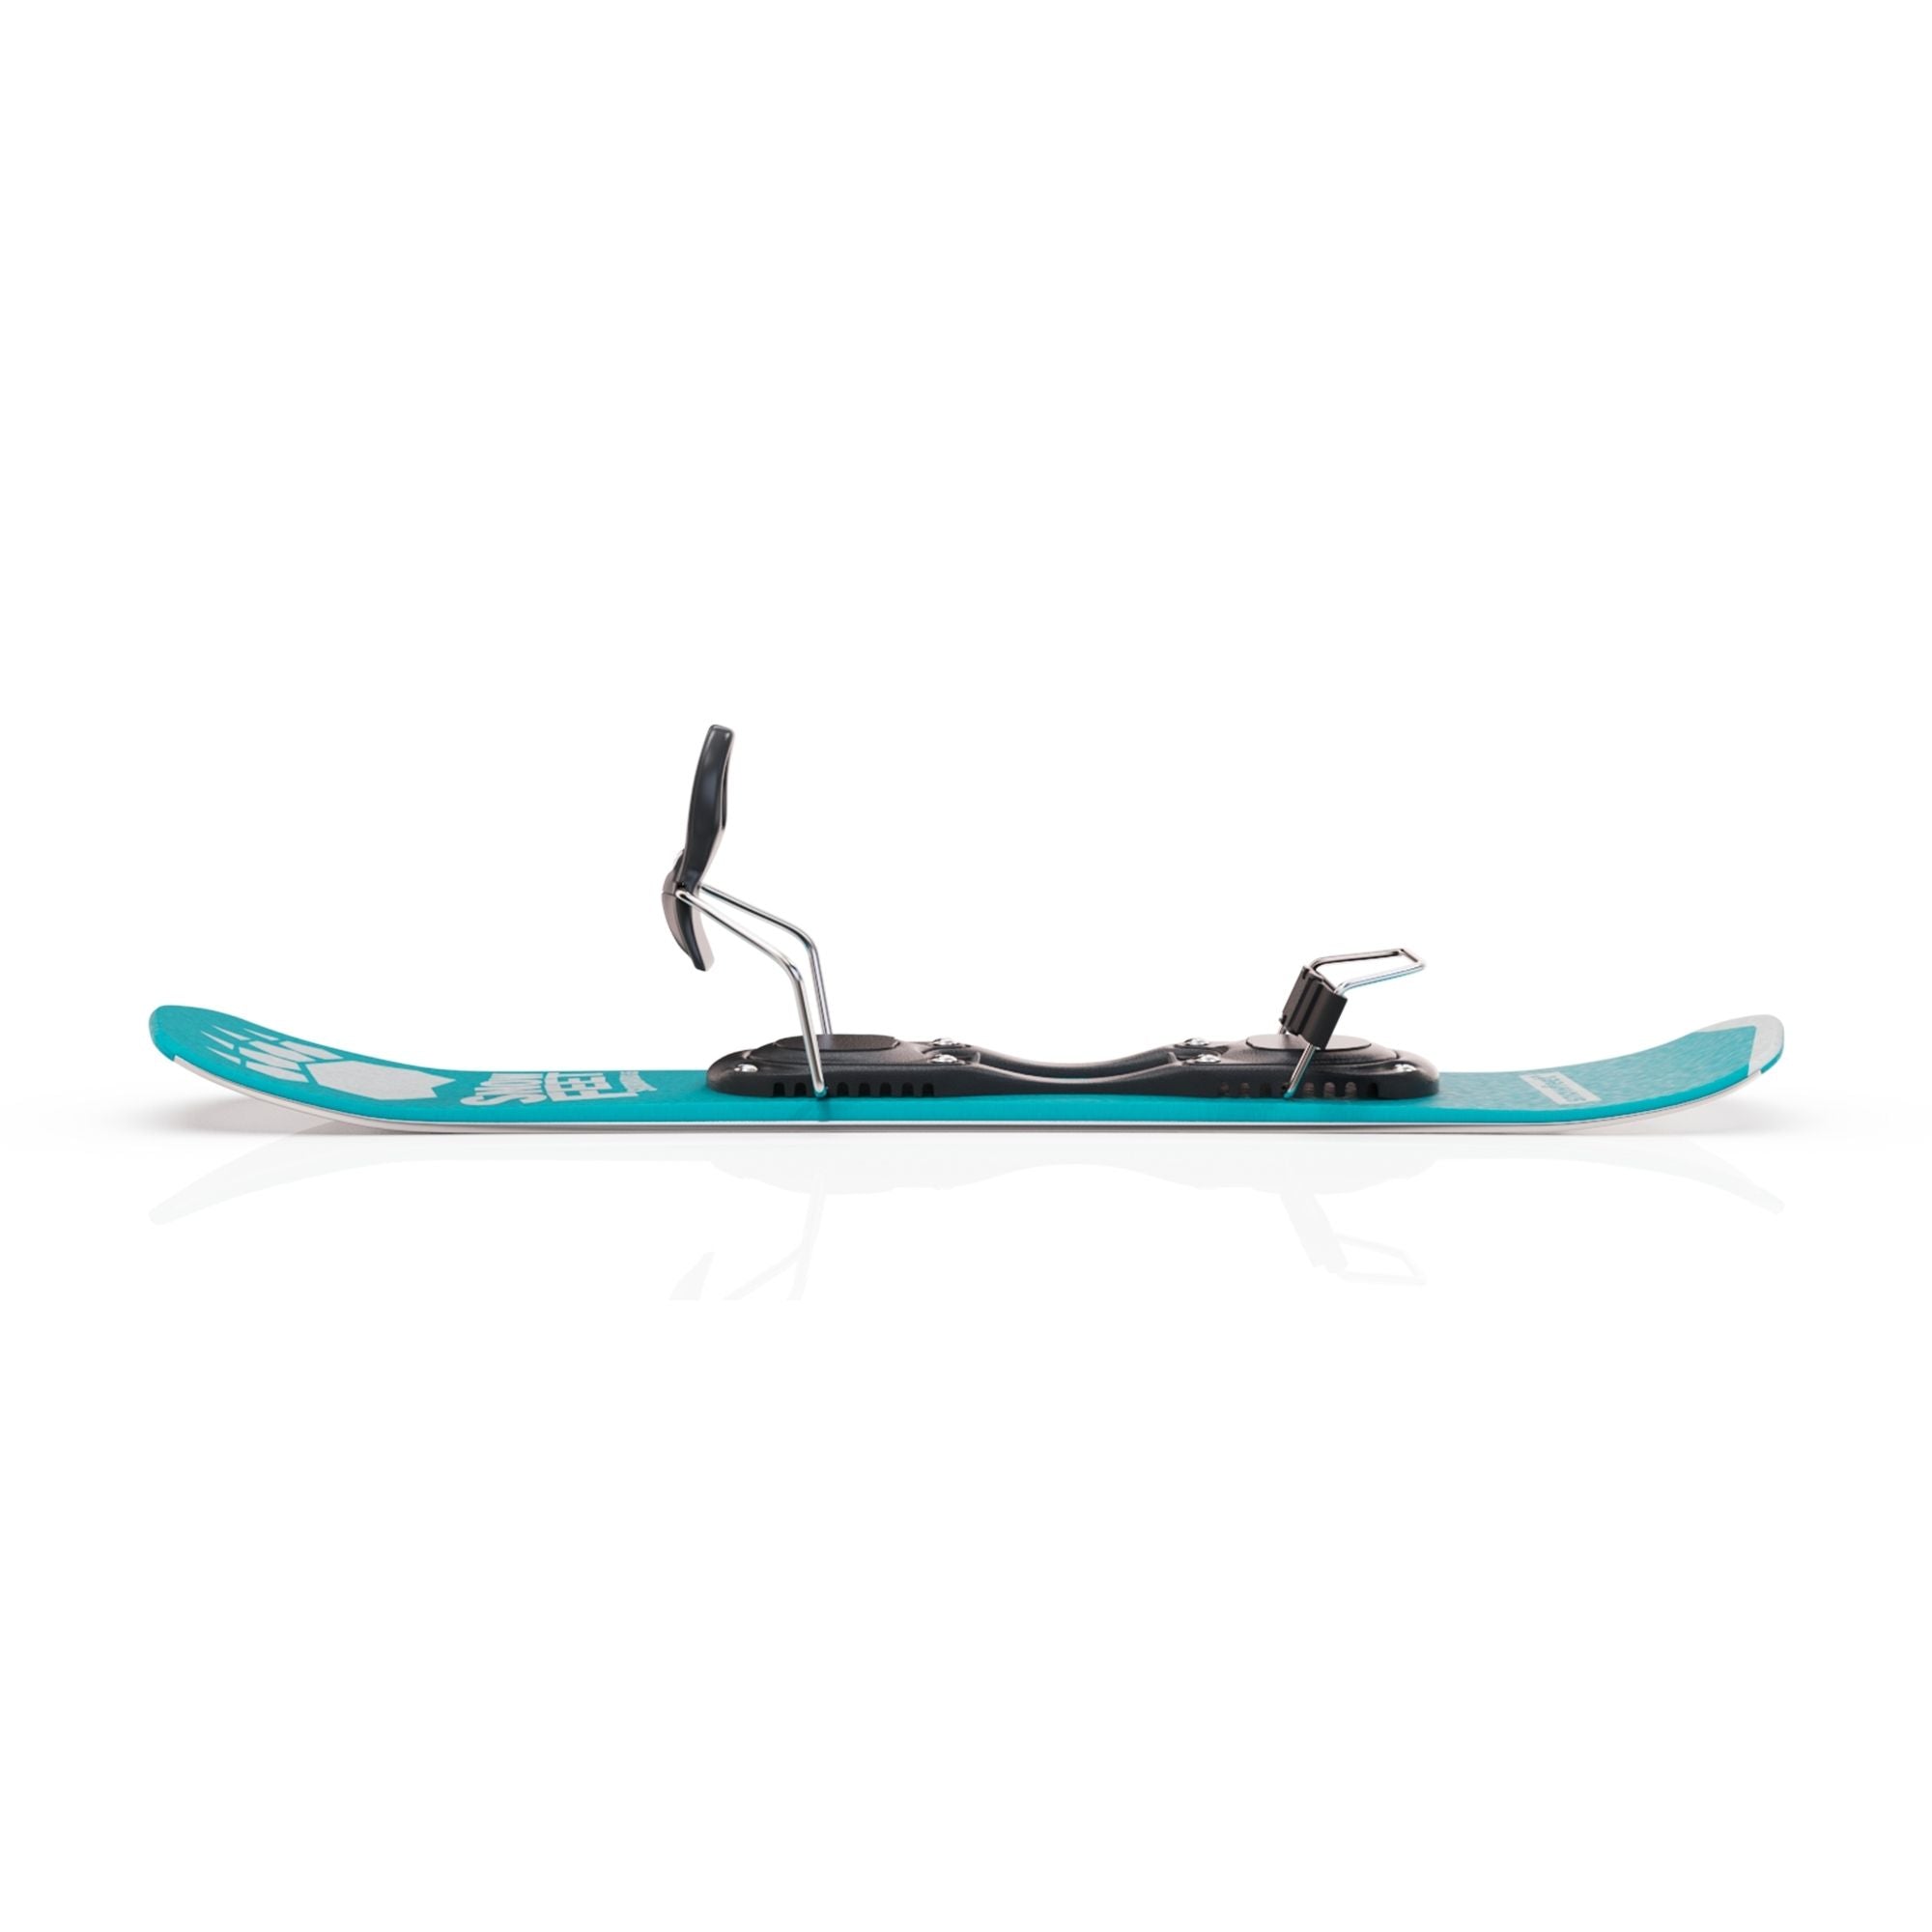 snowfeet-snowblades-for-snowboard-boots-black-skiboards-shortski-65cm-blue-turquoise